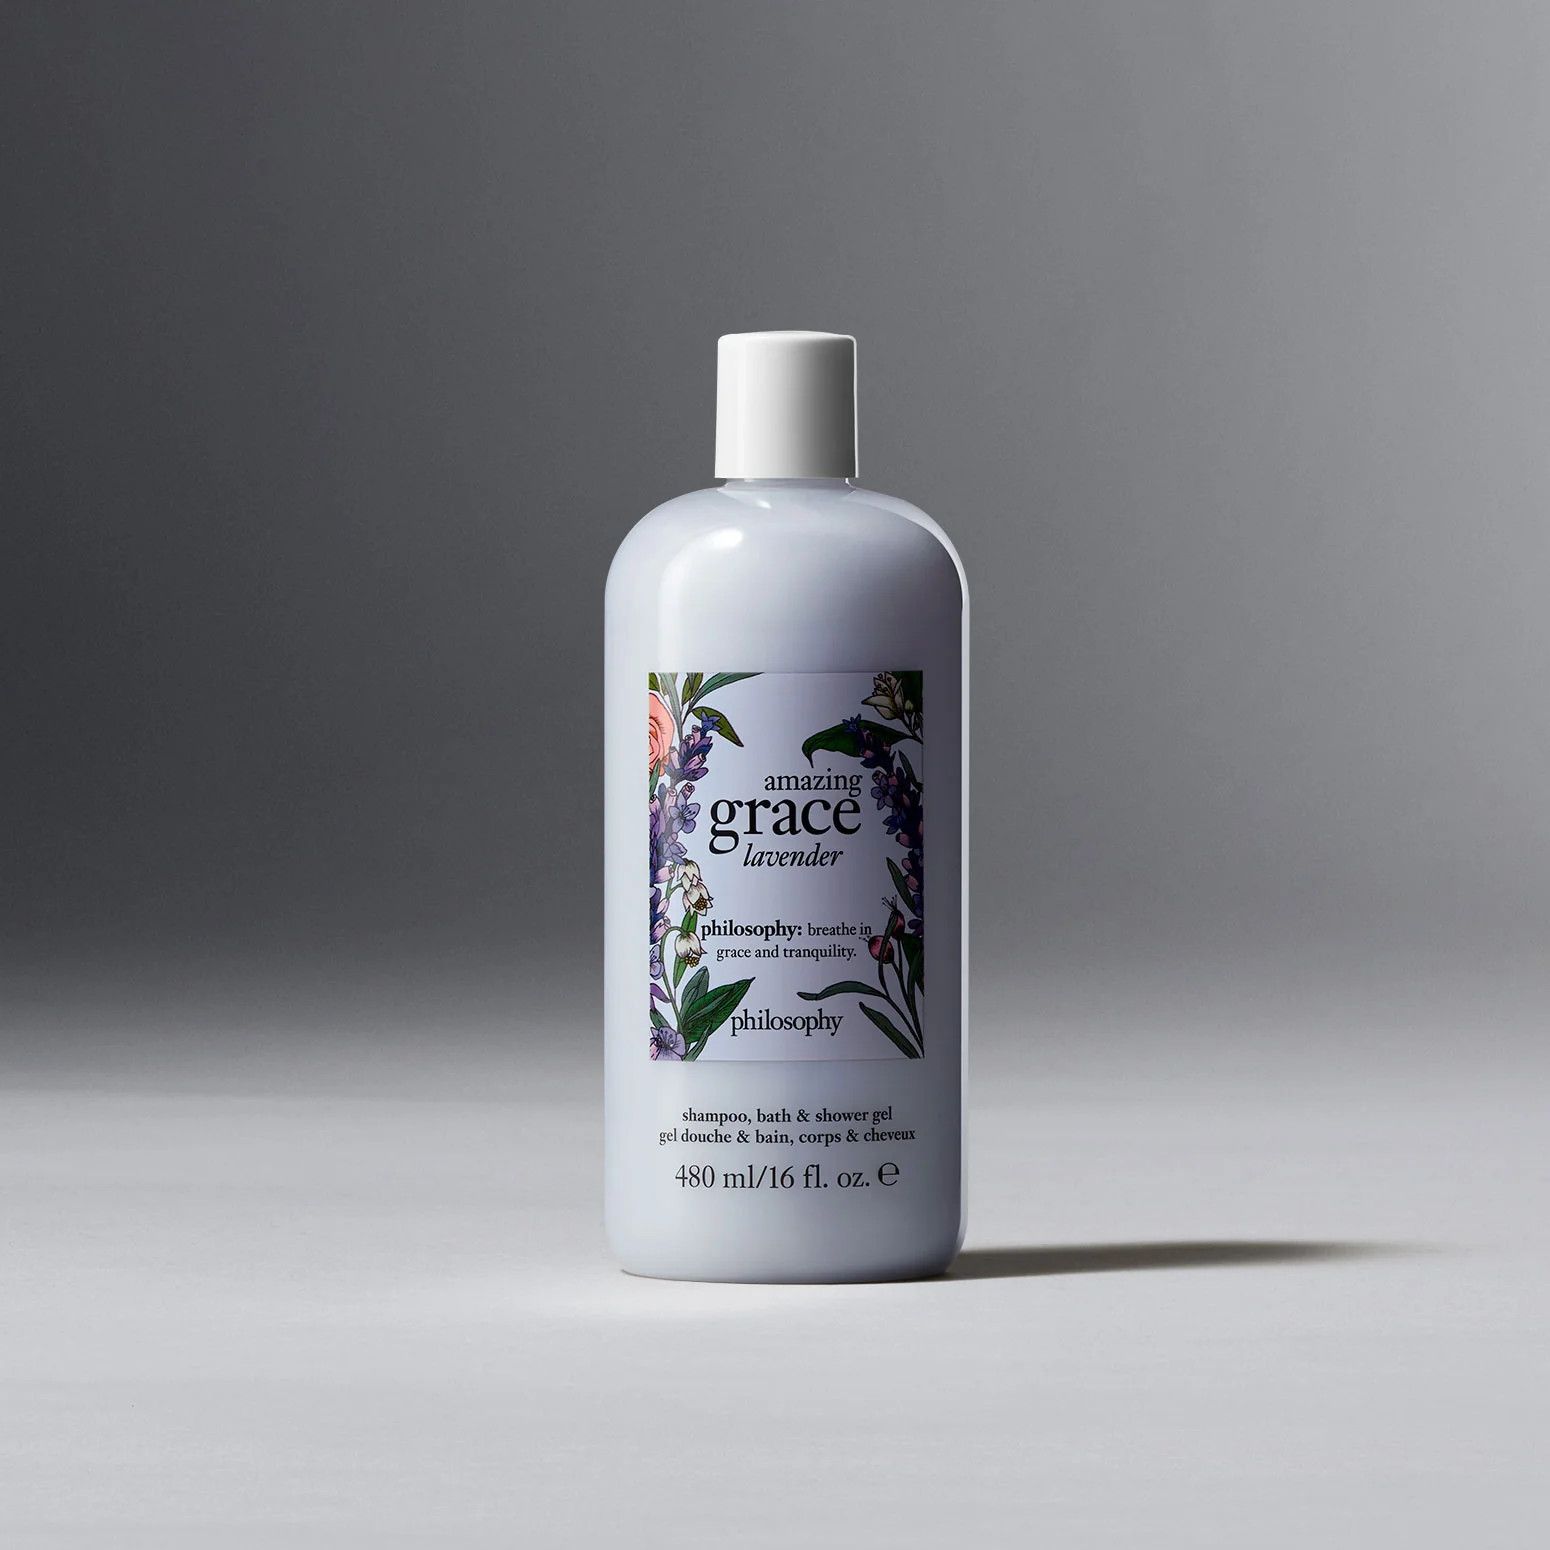 lavender shampoo, bath & shower gel | Philosophy